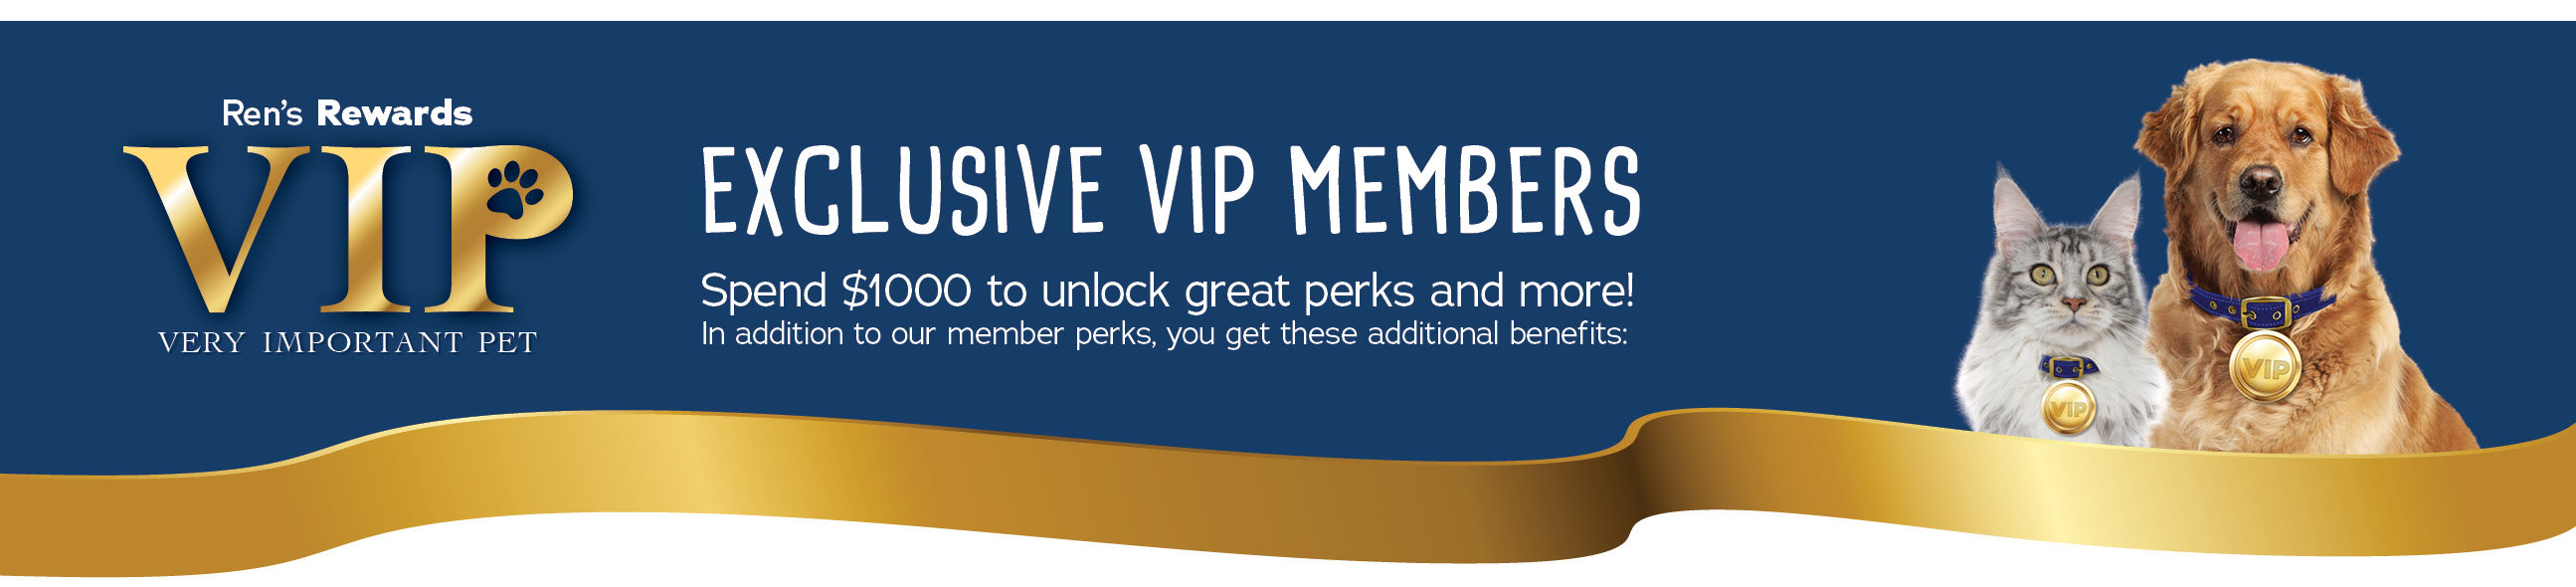 Ren's VIP Rewards - Spend $1000 to unlock these perks